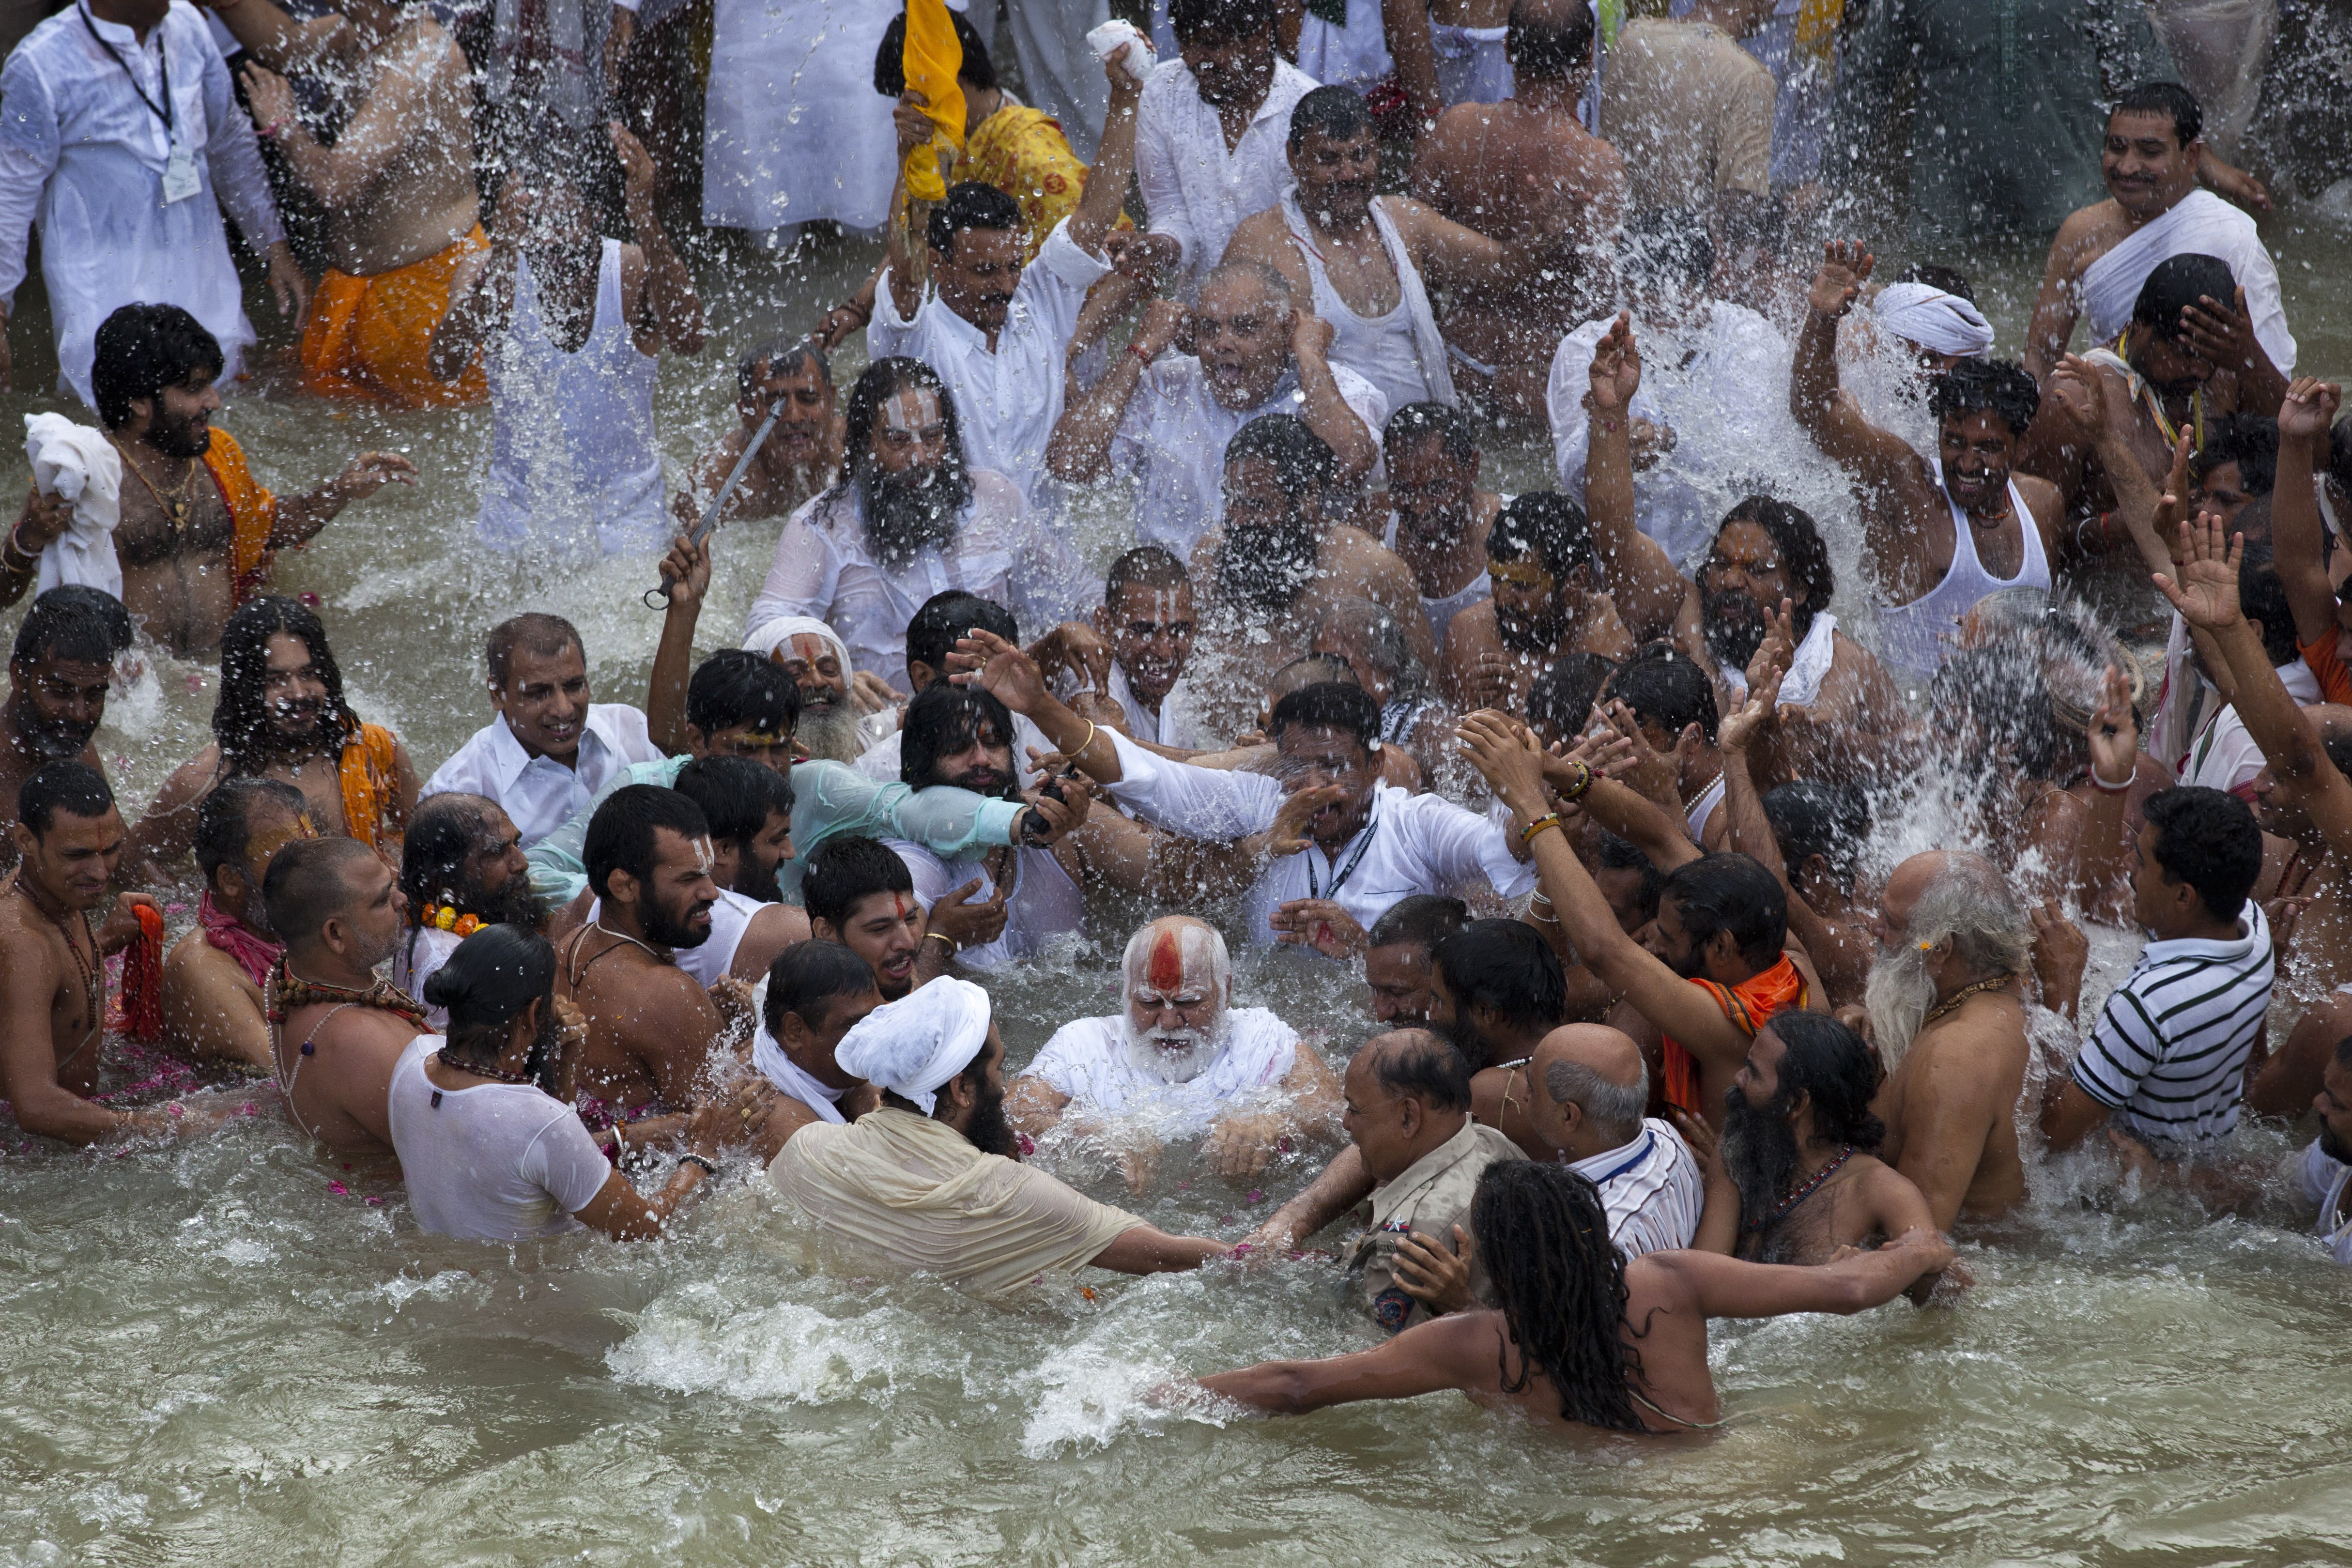 Indian Sadhus, or Hindu holy men, surround their guru, center, during a bath in the Godavari River during Kumbh Mela, or Pitcher Festival in Nashik, India, on Aug. 29, 2015.